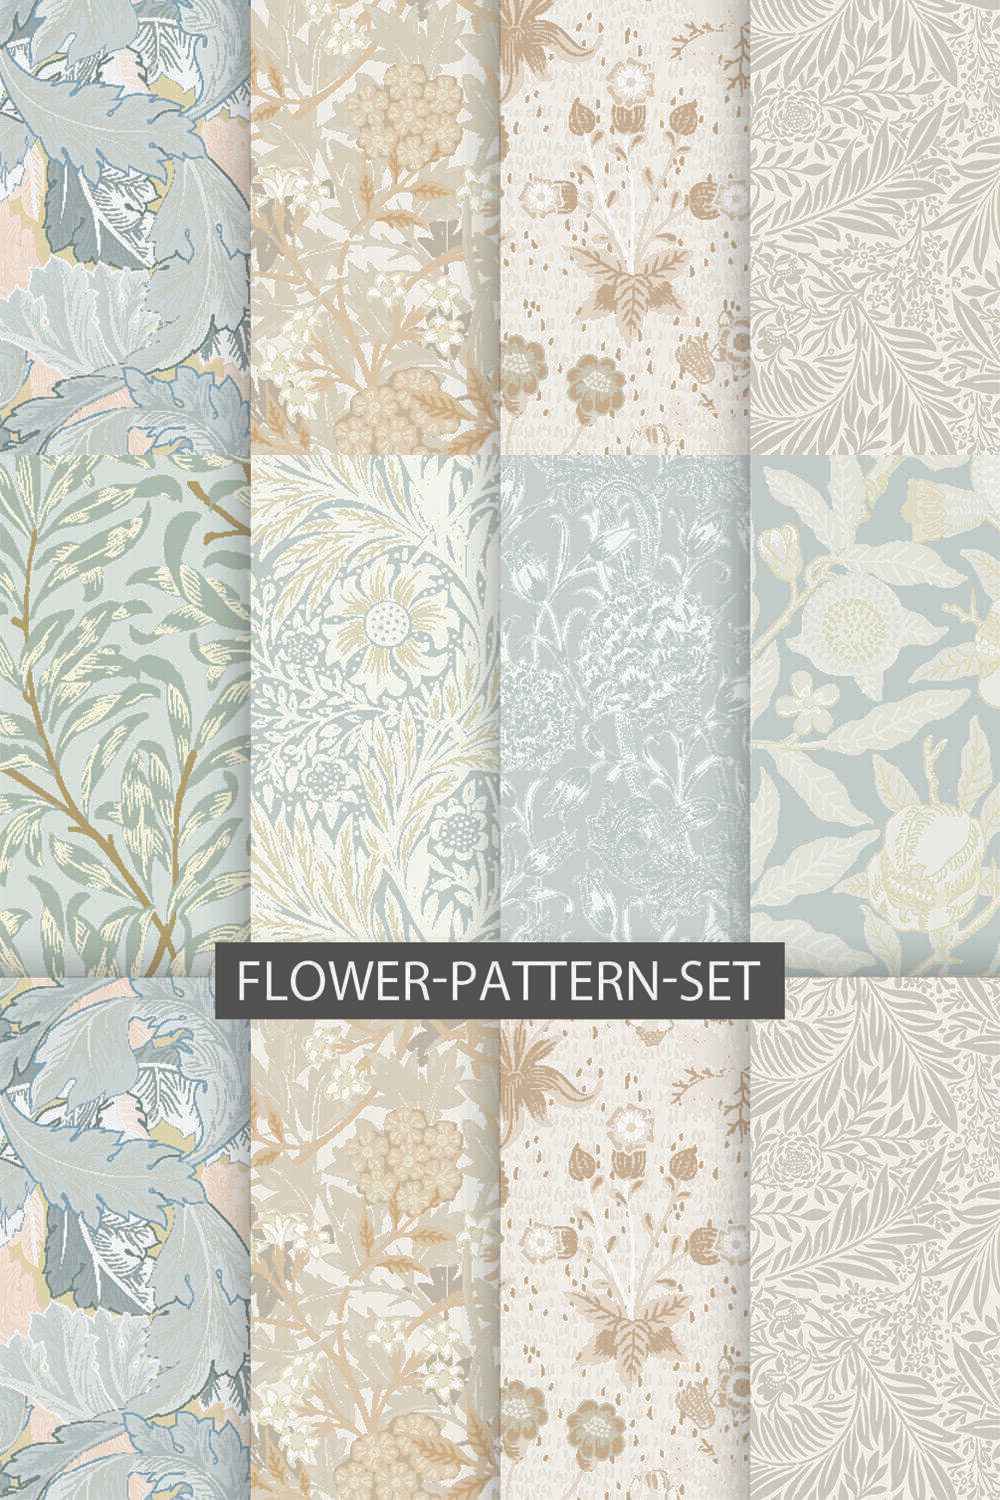 flower-pattern-set pinterest preview image.